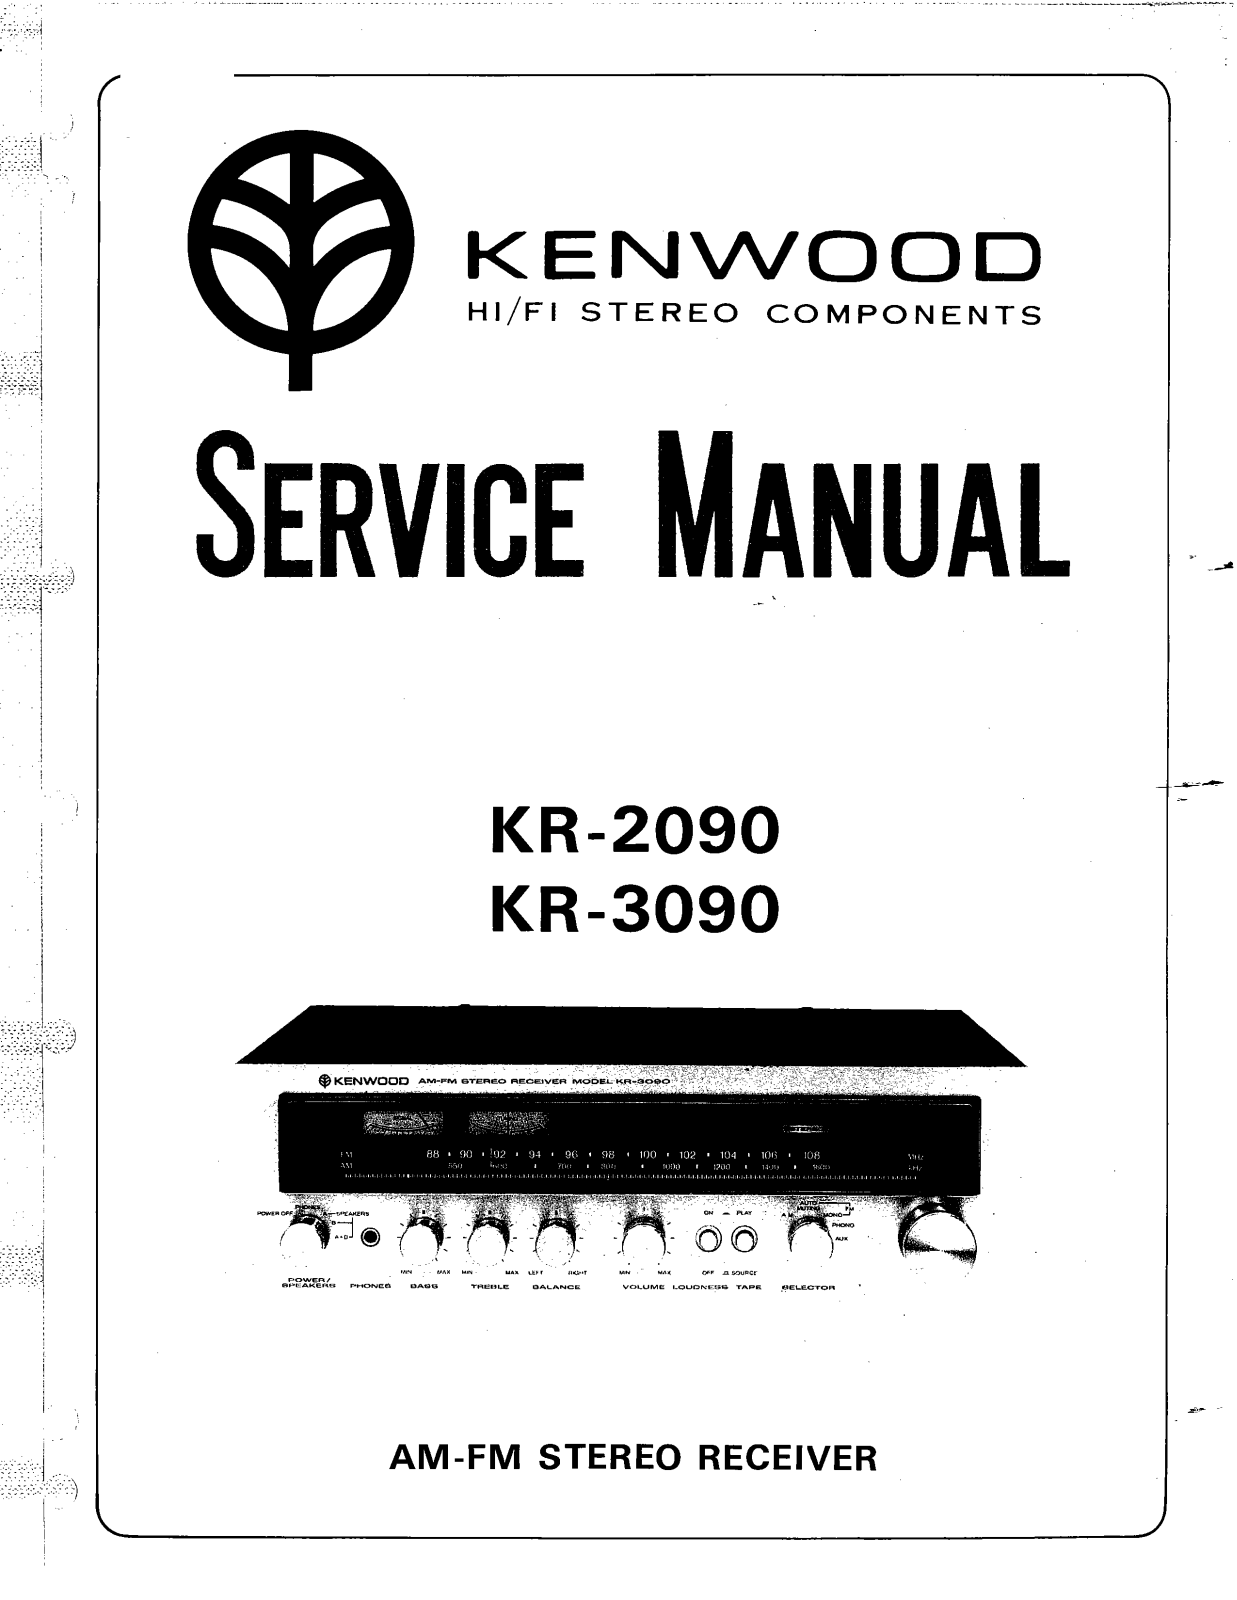 Kenwood KR-3090, KR-2090 Service Manual